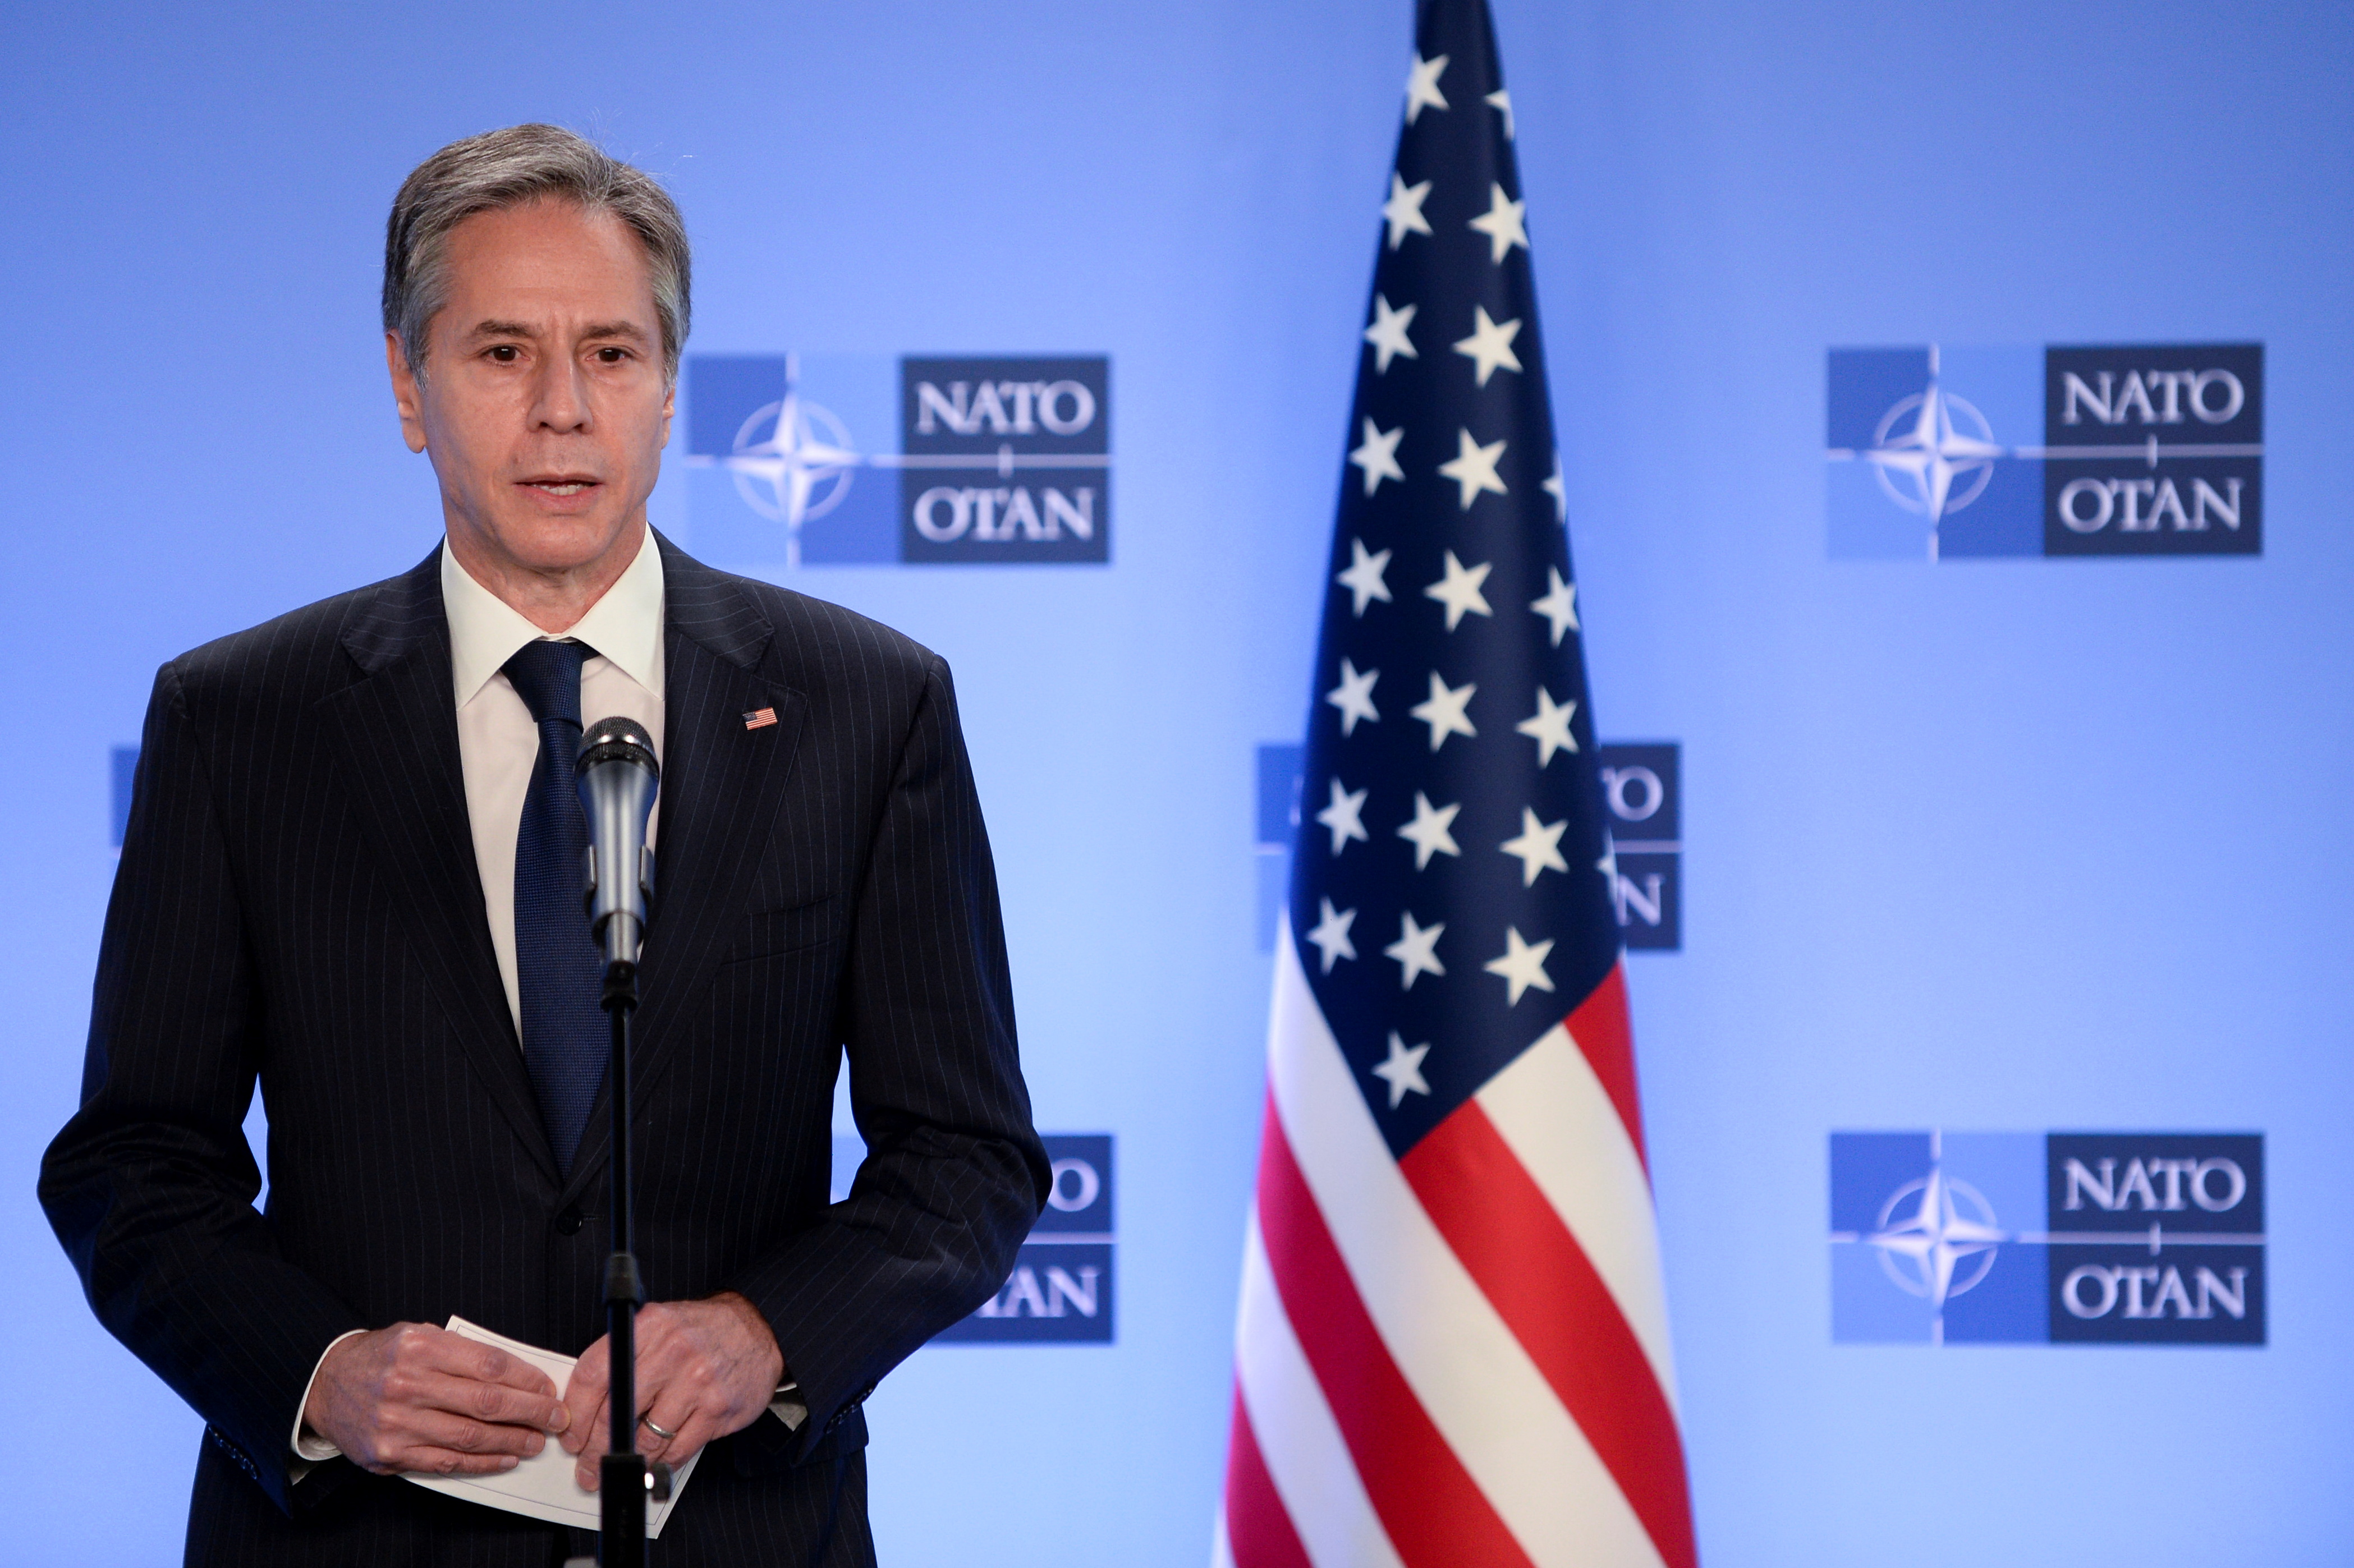 U.S. Secretary of State Blinken meets NATO Secretary General Stoltenberg in Brussels